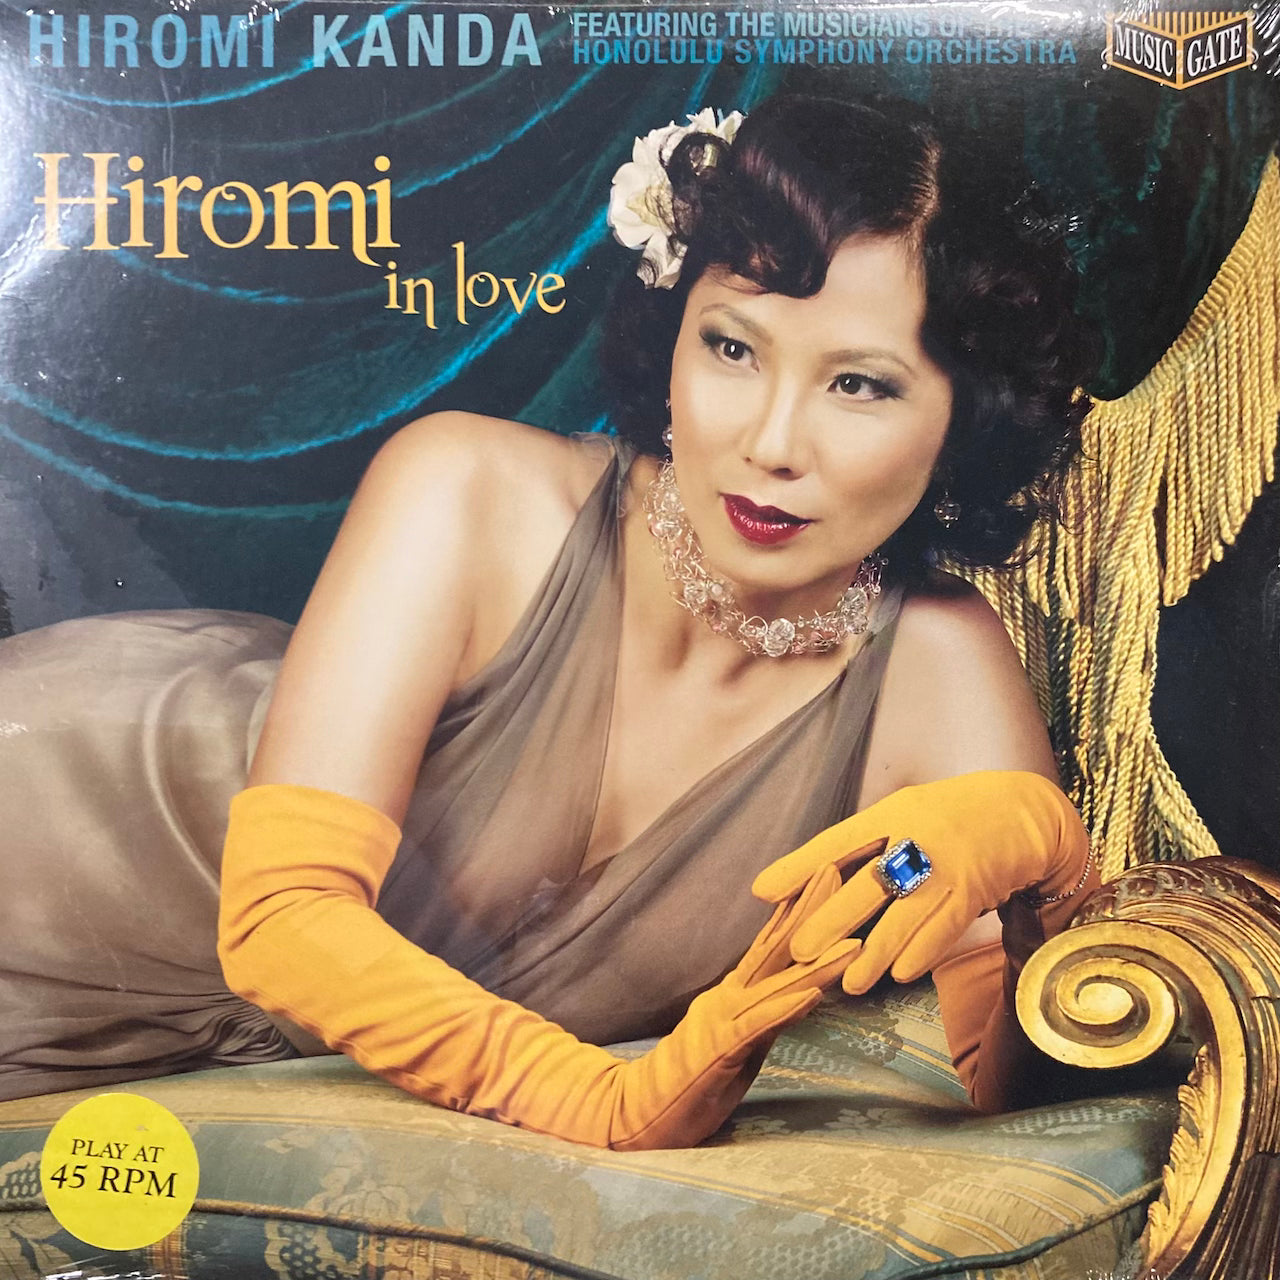 Hiromi Kanda - Hiromi in Love [sealed]